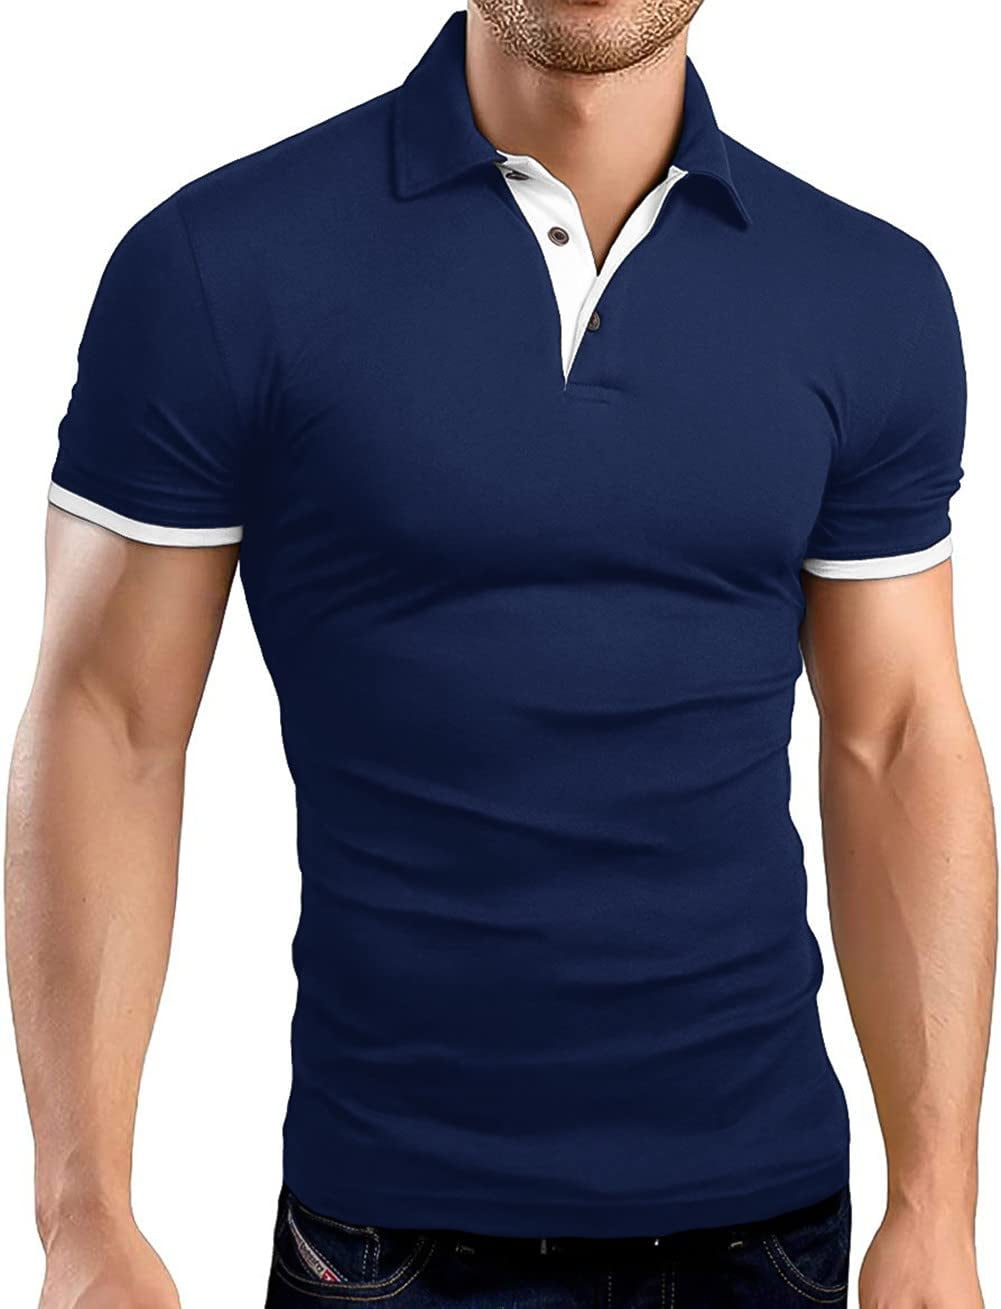 MLANM Men's Short Sleeve Polo Shirts Casual Classic Fit Cotton Pique ...